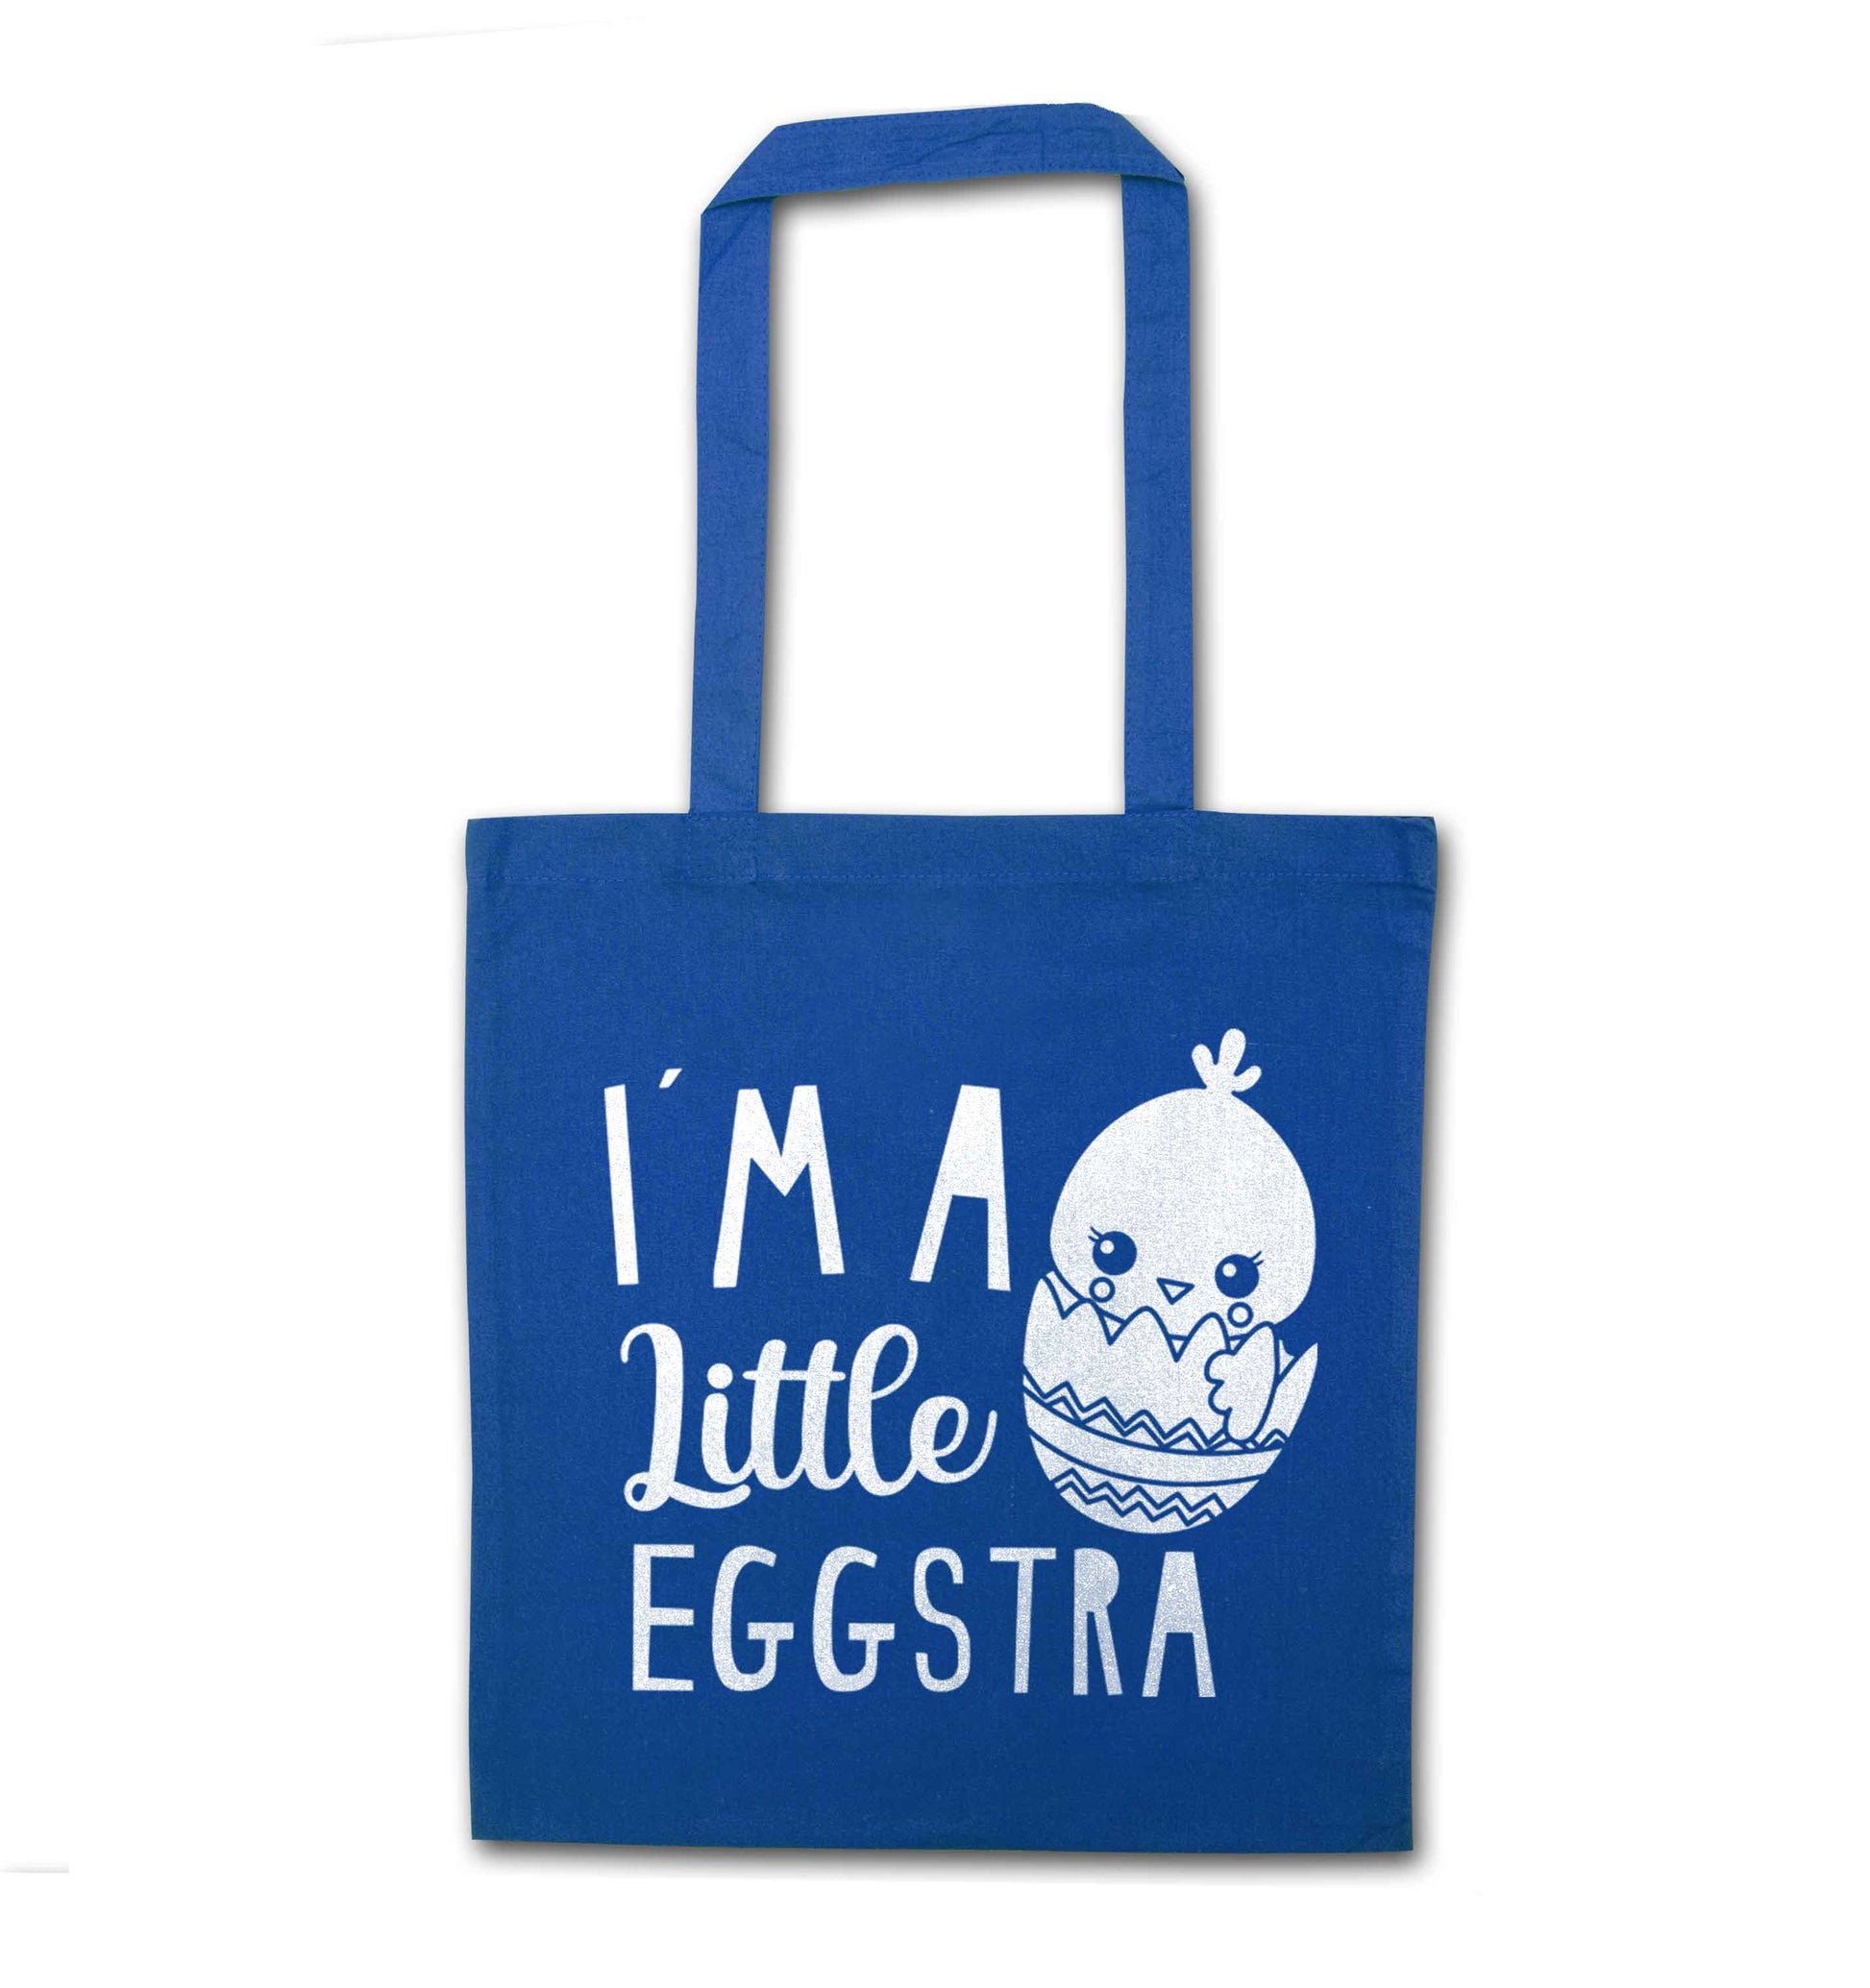 I'm a little eggstra blue tote bag